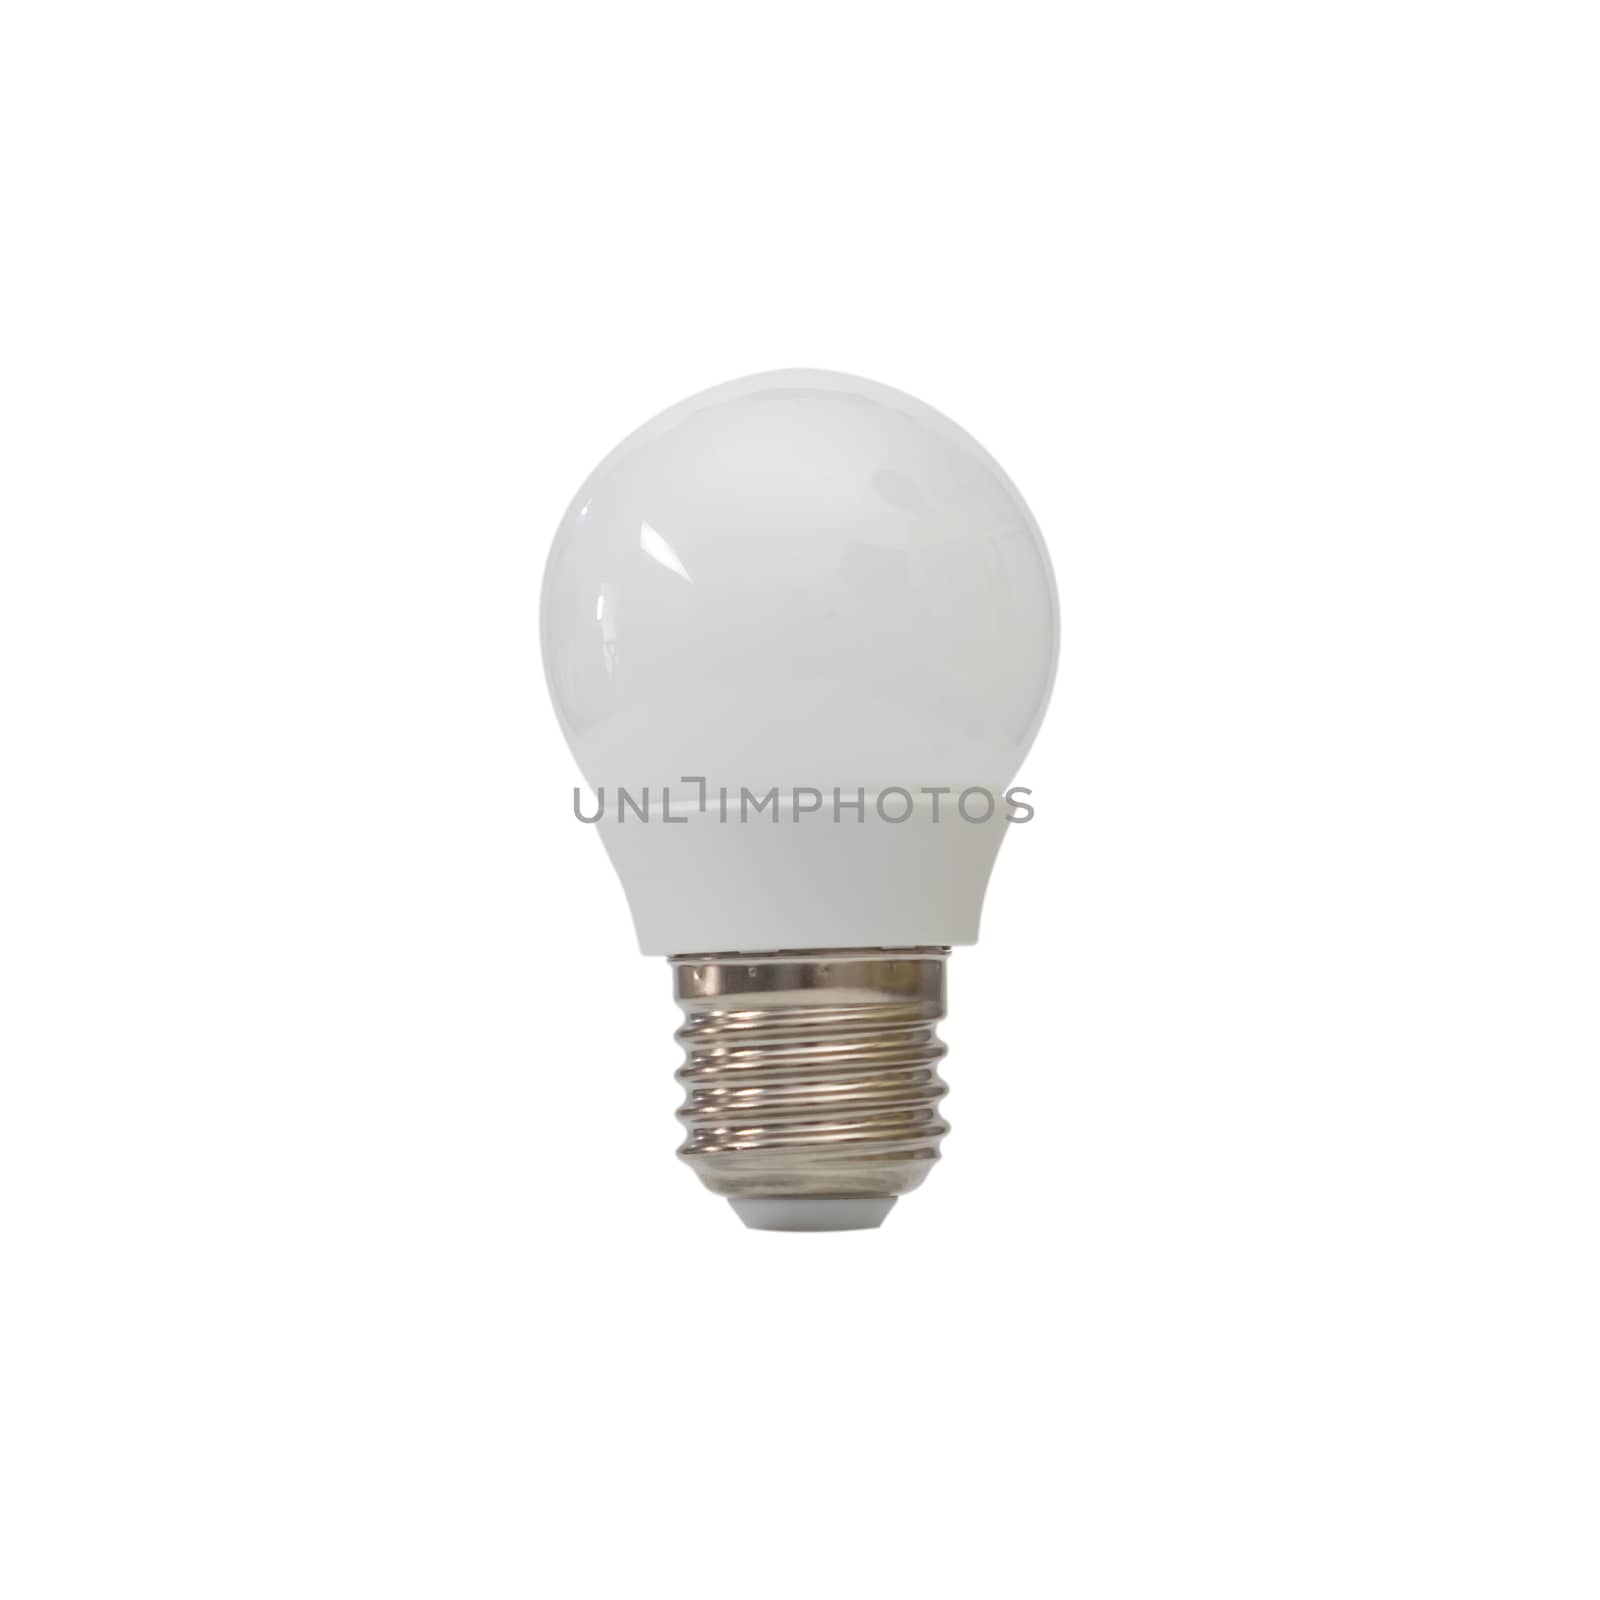 Close up of white light bulb isolated on white  background.